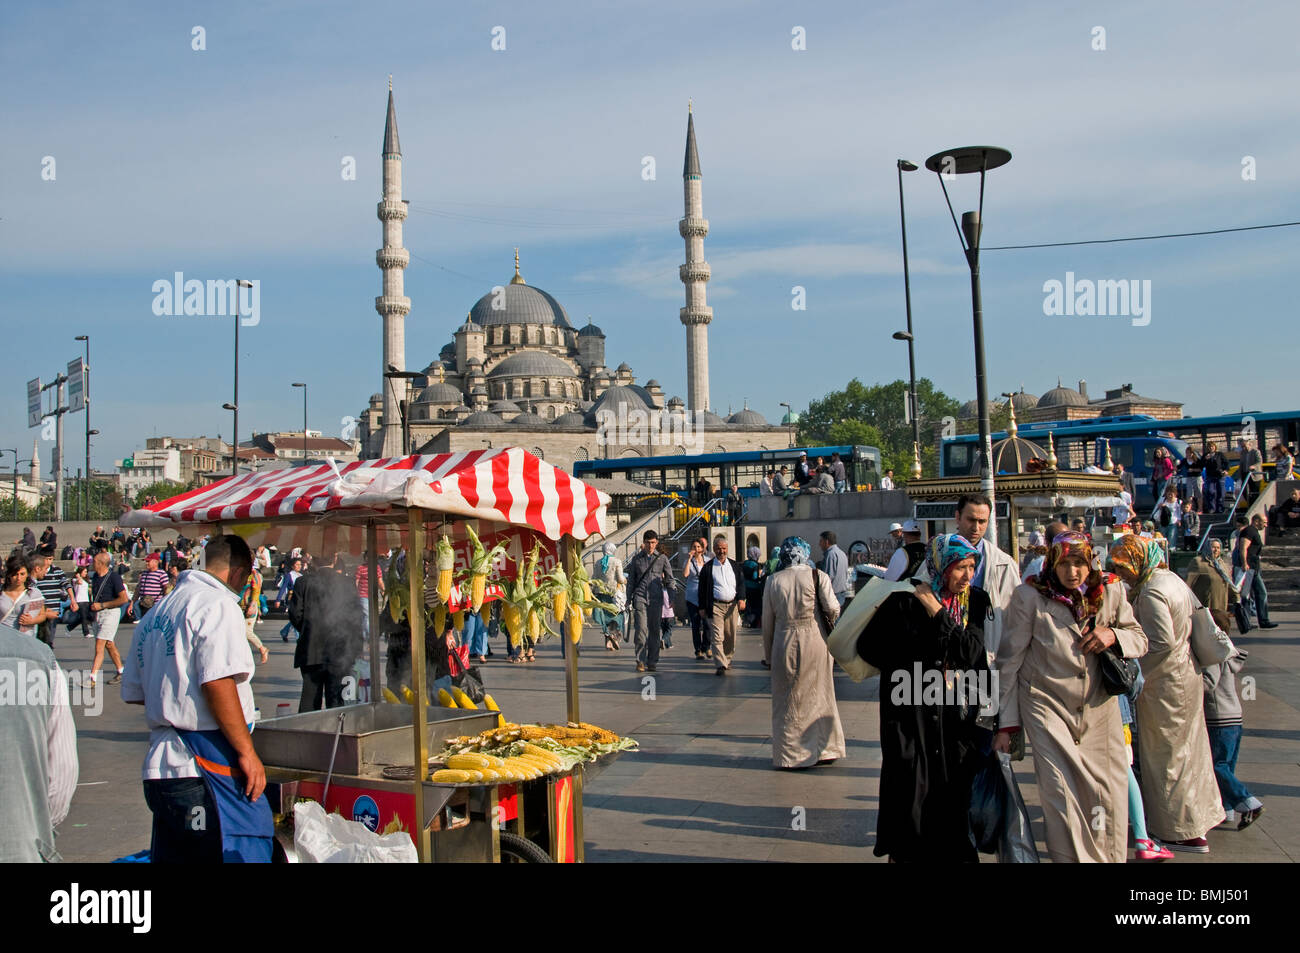 Istanbul Golden Horn ponte Galata waterfront moschea Yeni Camil Meydani Eminonu mais alla griglia Foto Stock